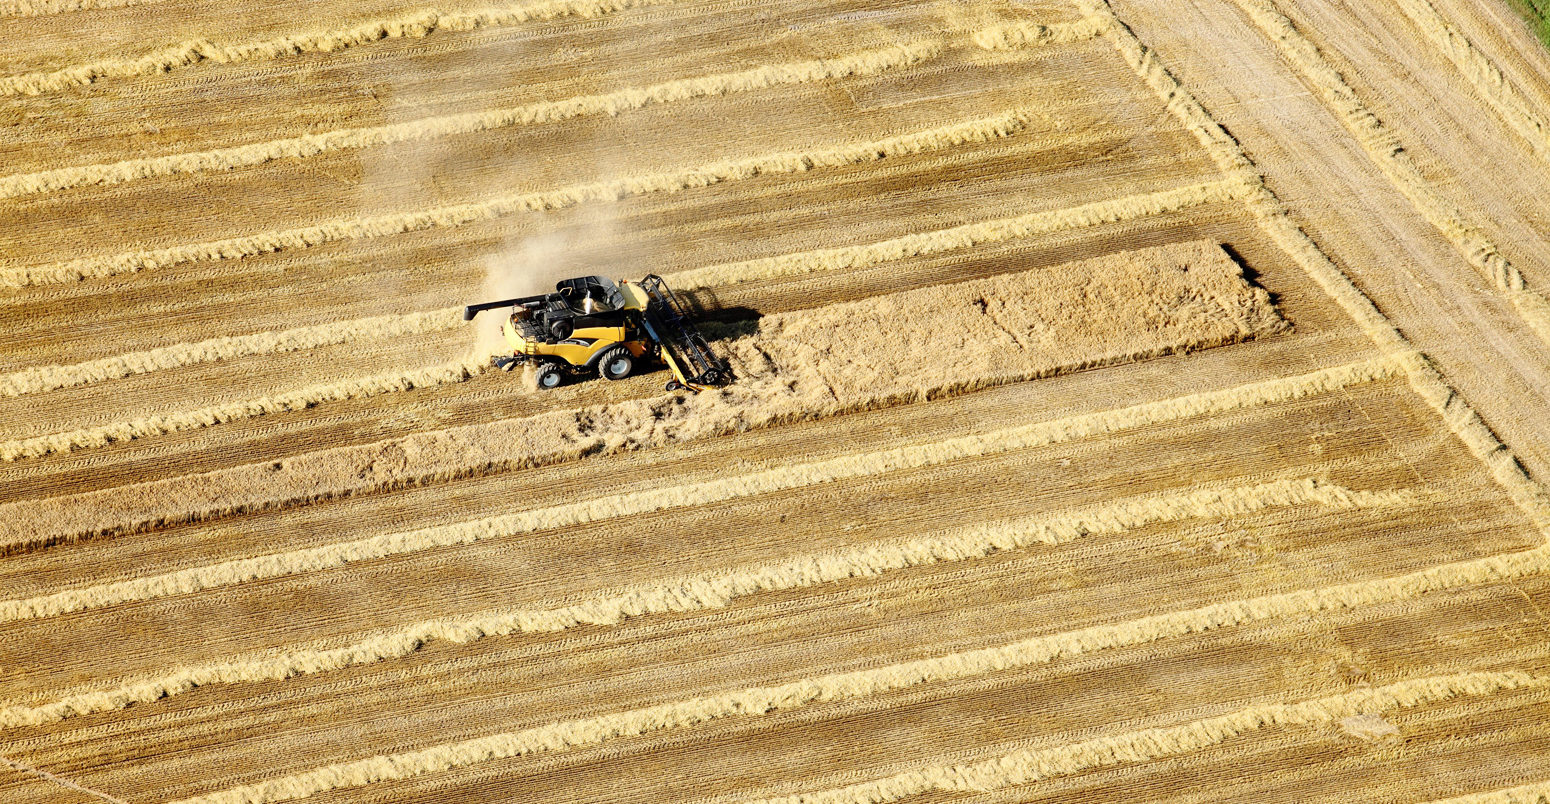 An aerial view of farm machinery in the field harvesting wheat Idaho_EN9MDW